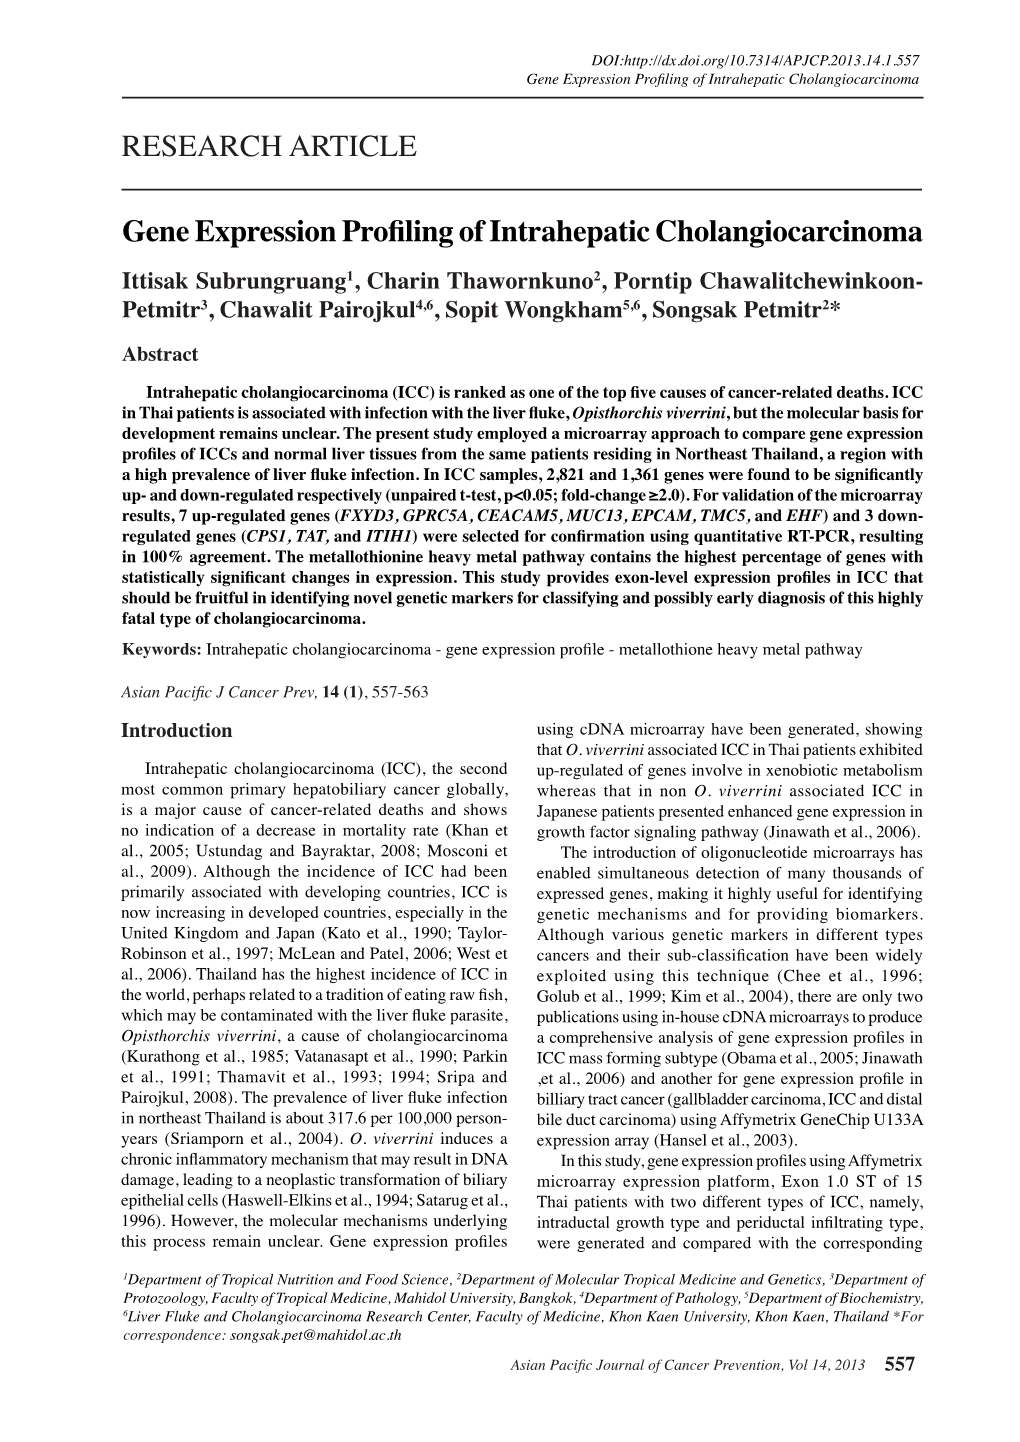 Gene Expression Profiling of Intrahepatic Cholangiocarcinoma